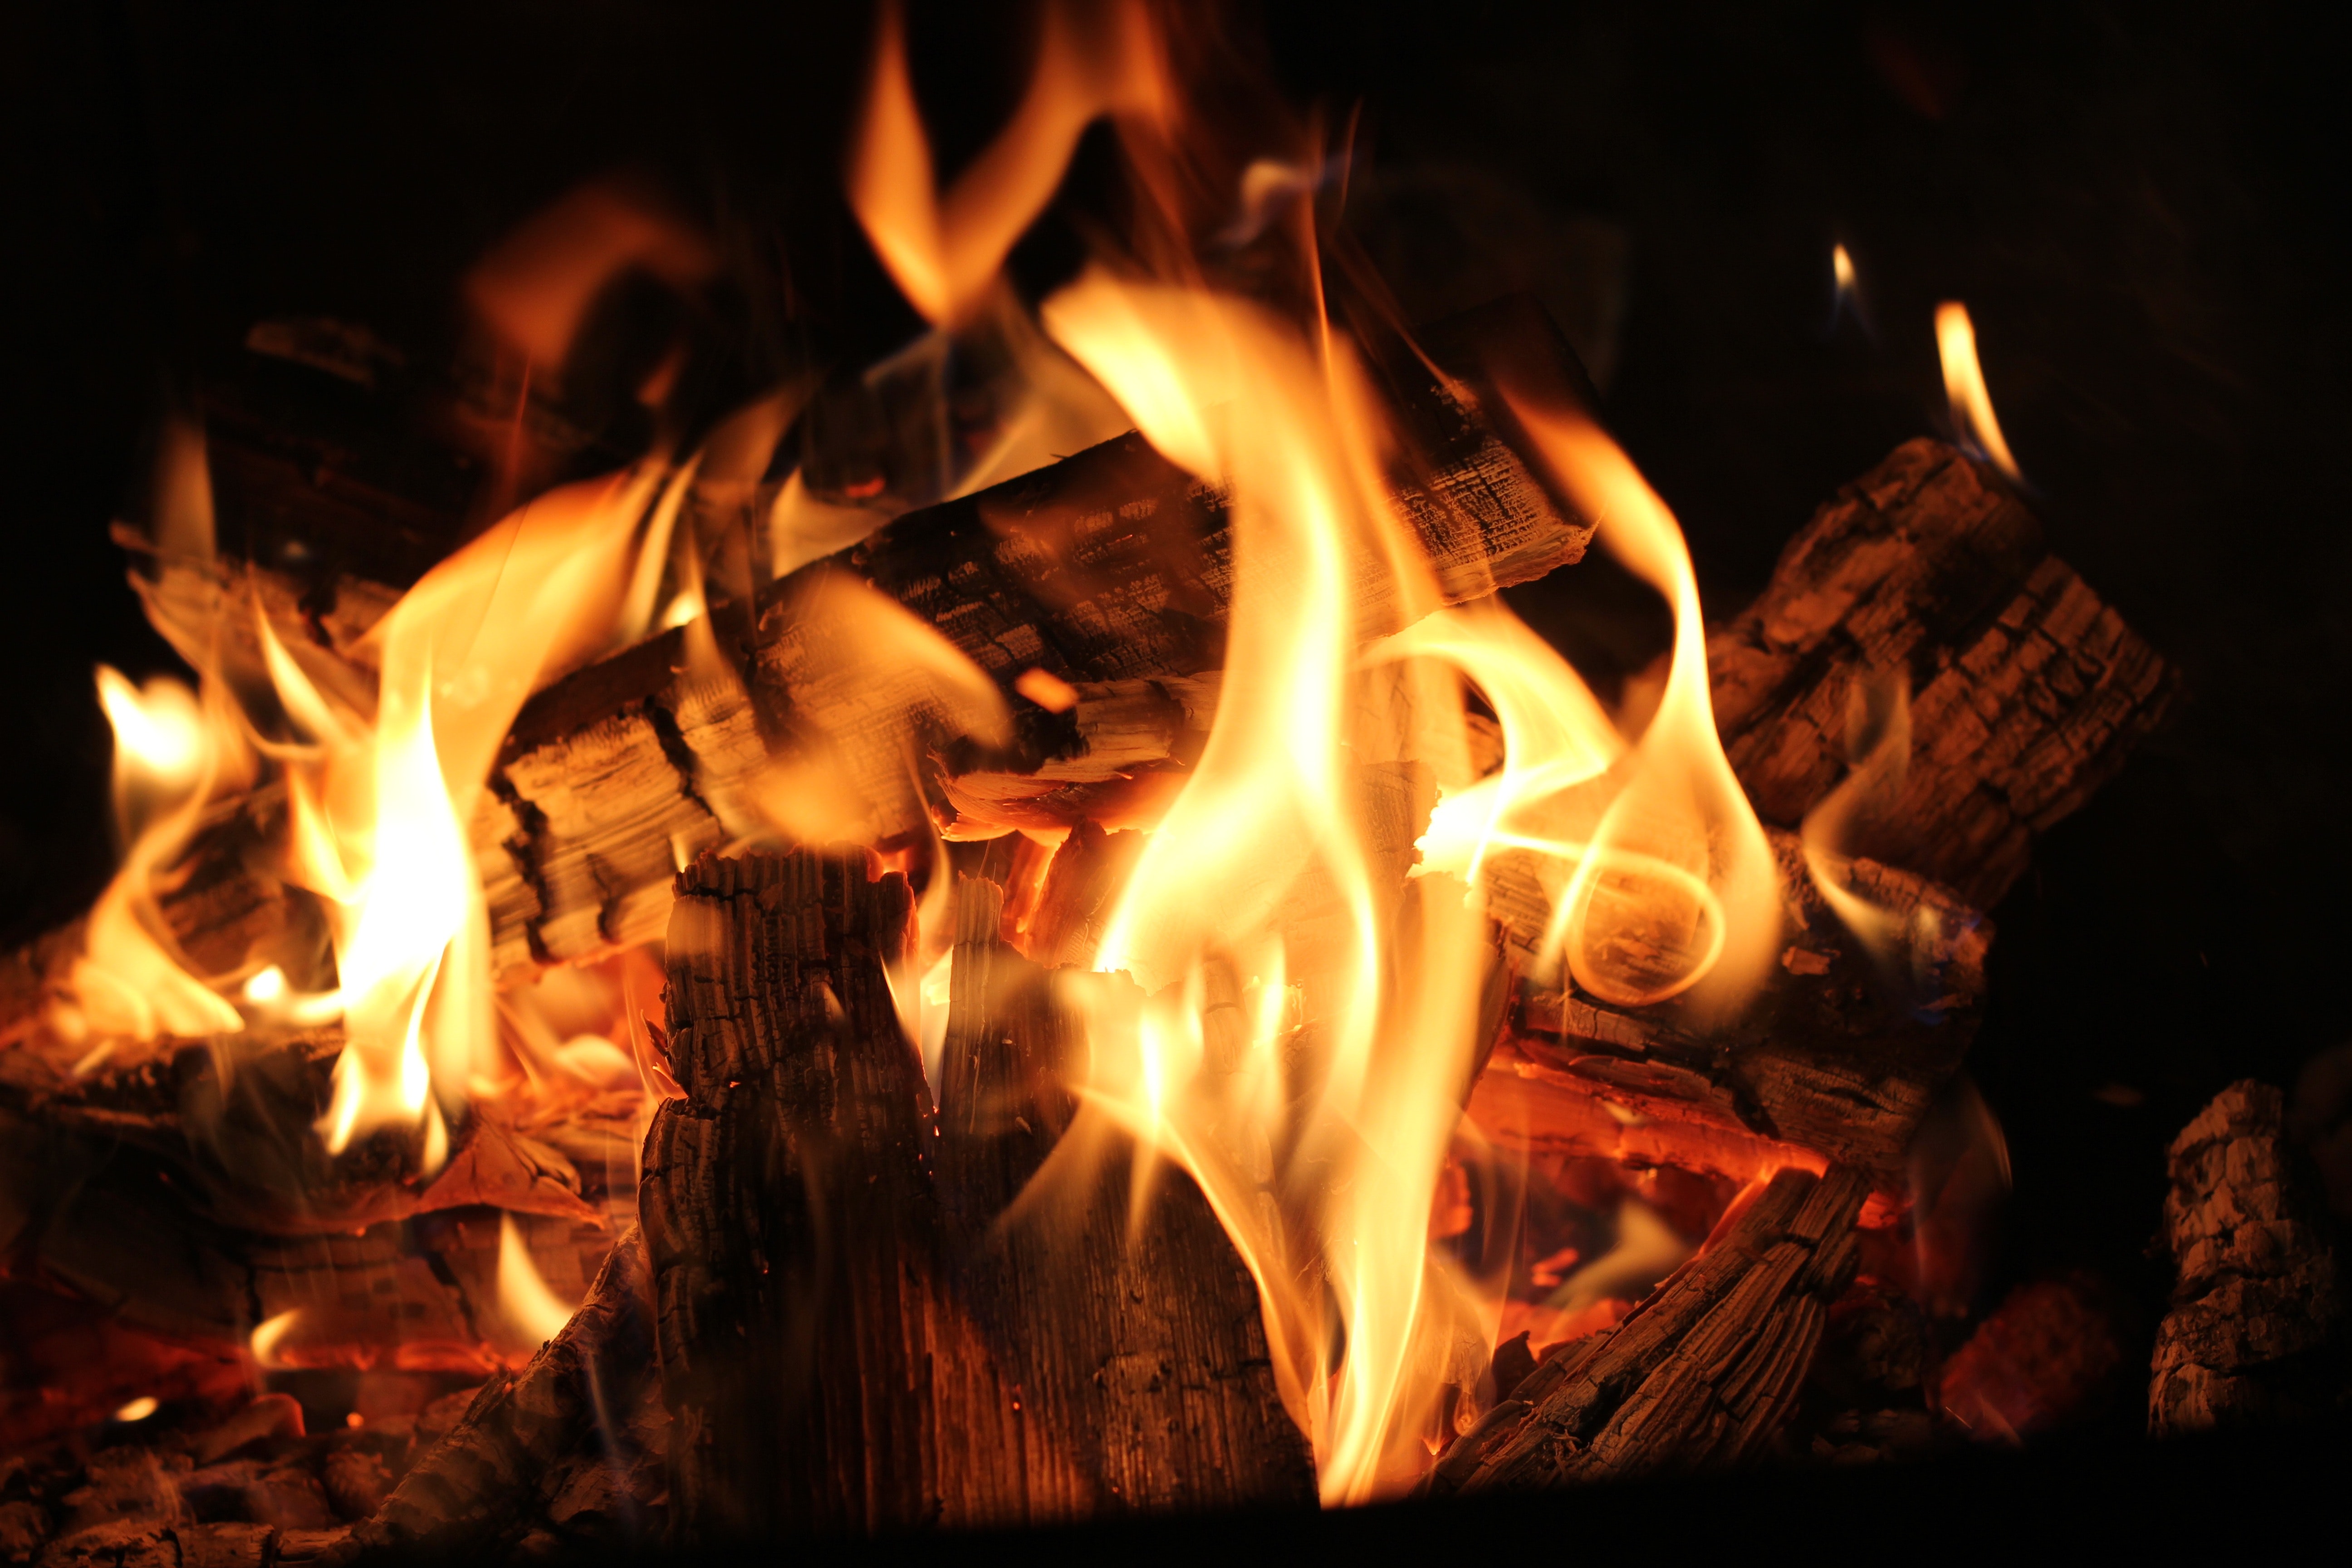 barbecue-blaze-bonfire-220129